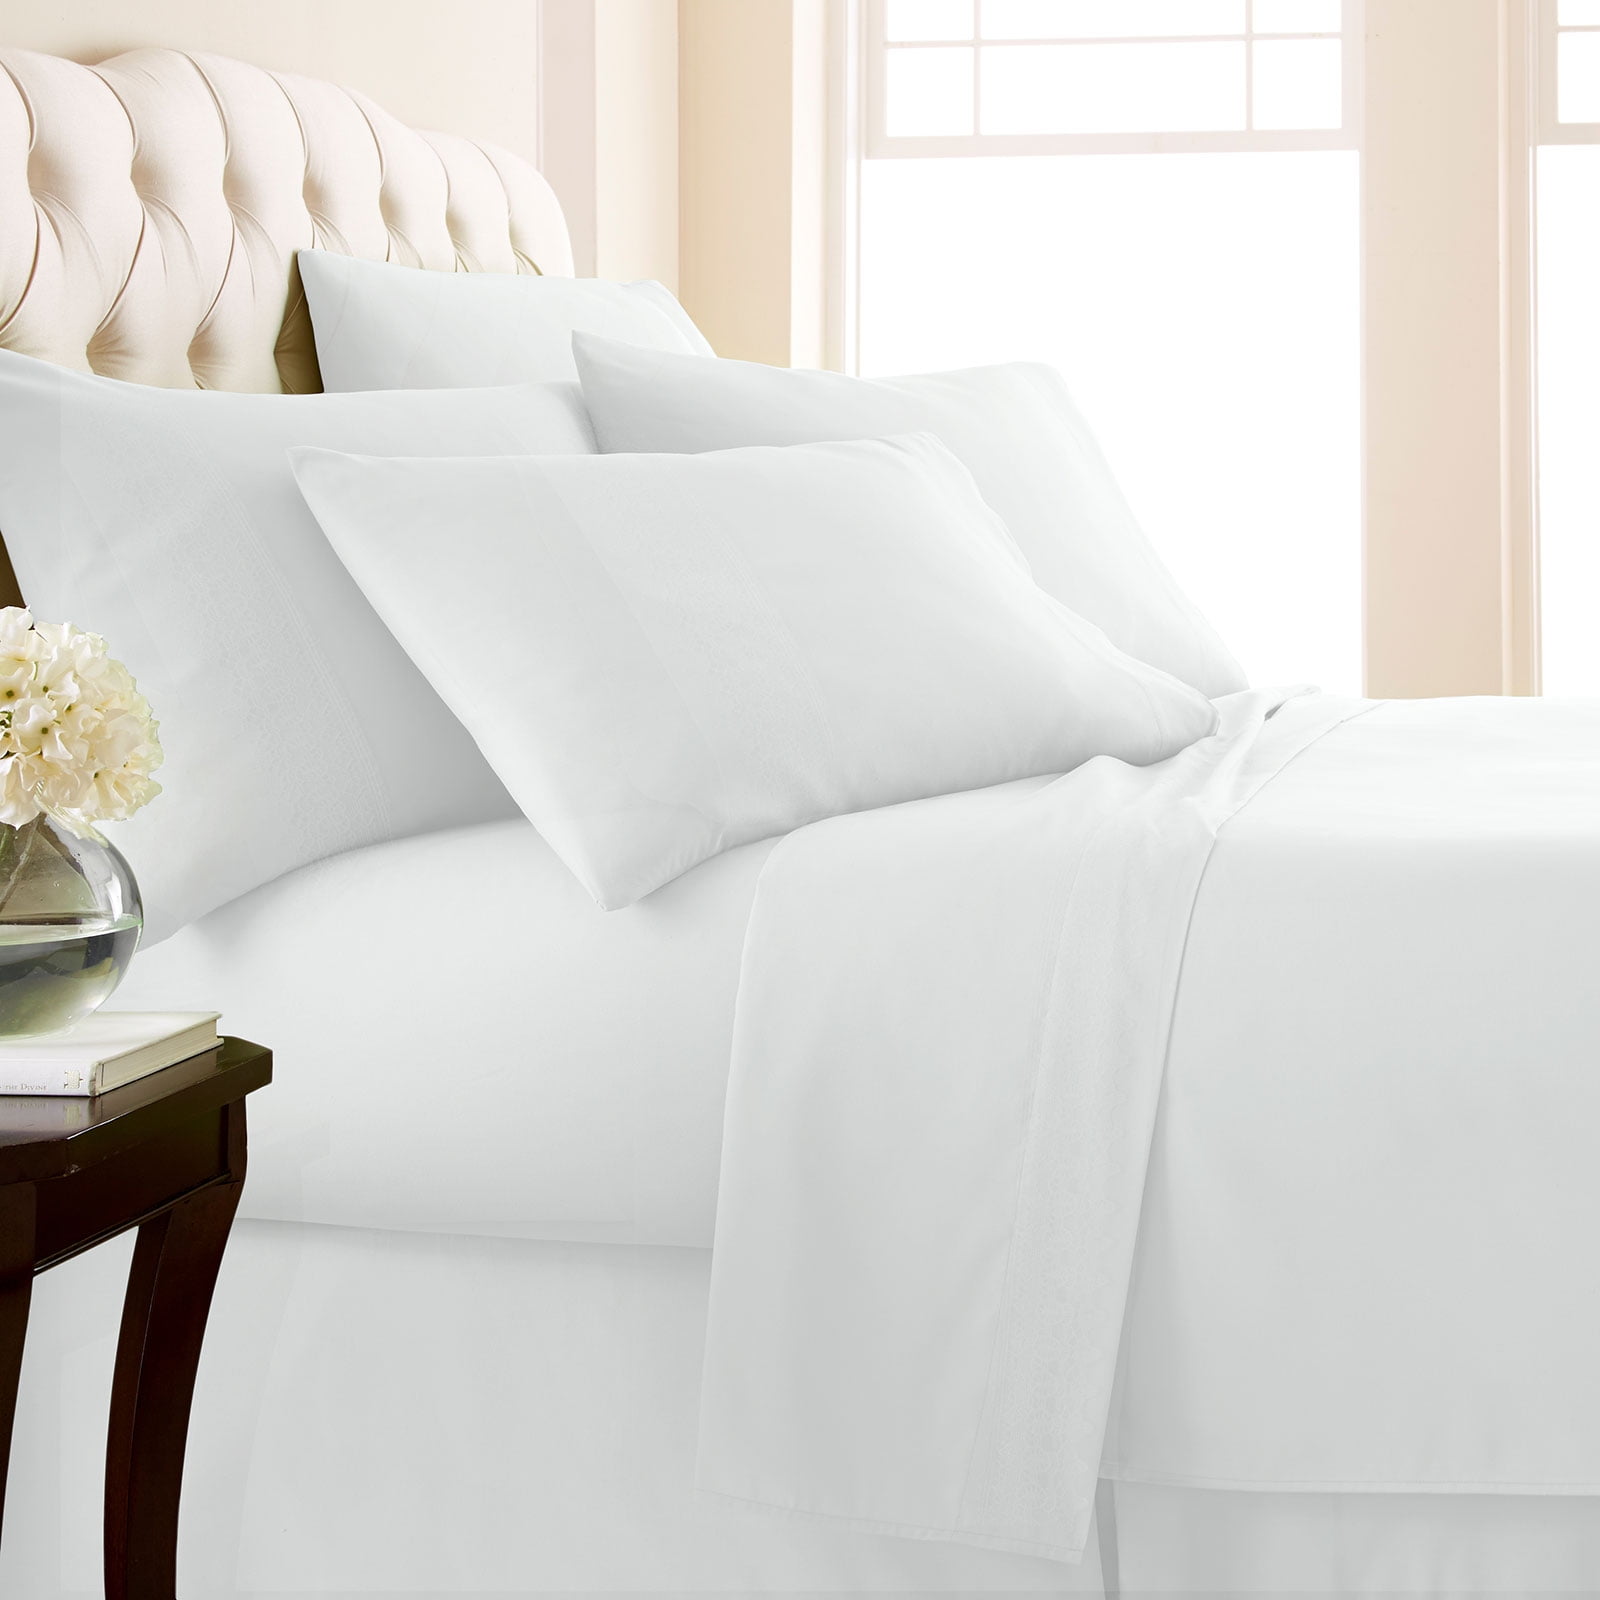 Details about   Extra Deep Pocket 6 Piece Bed Sheet Set 1000 TC 100% Cotton Ivory Stripe 